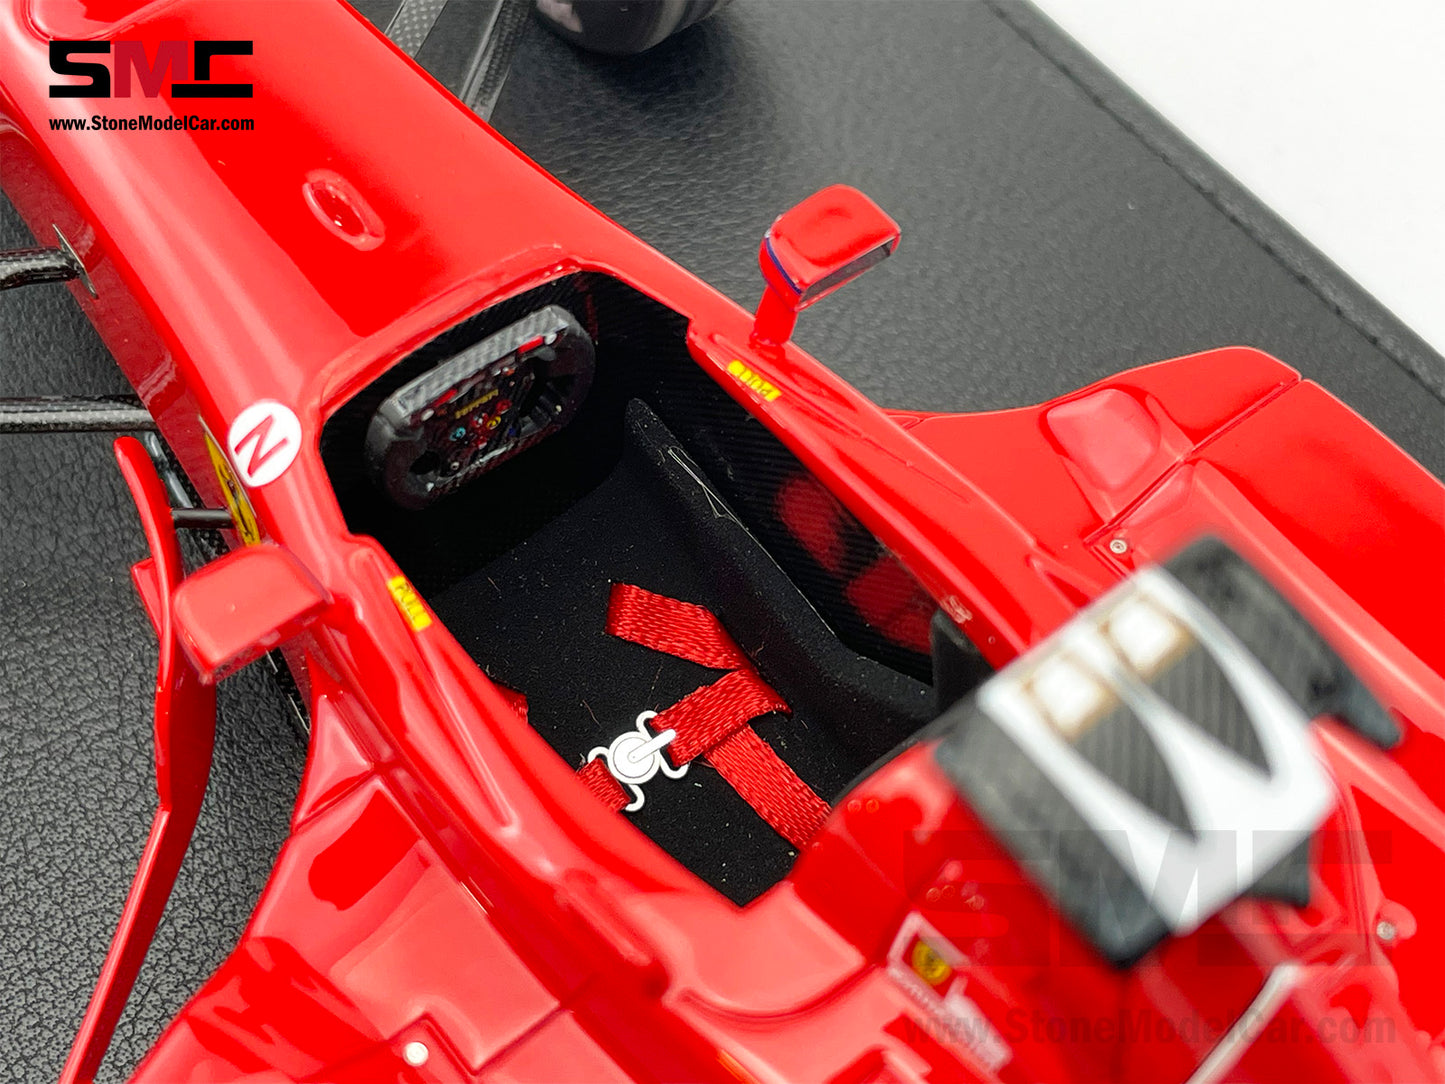 Ferrari F1 F399 #3 Michael Schumacher Monaco GP Winner 1999 1:18 GP REPLICAS + Decal